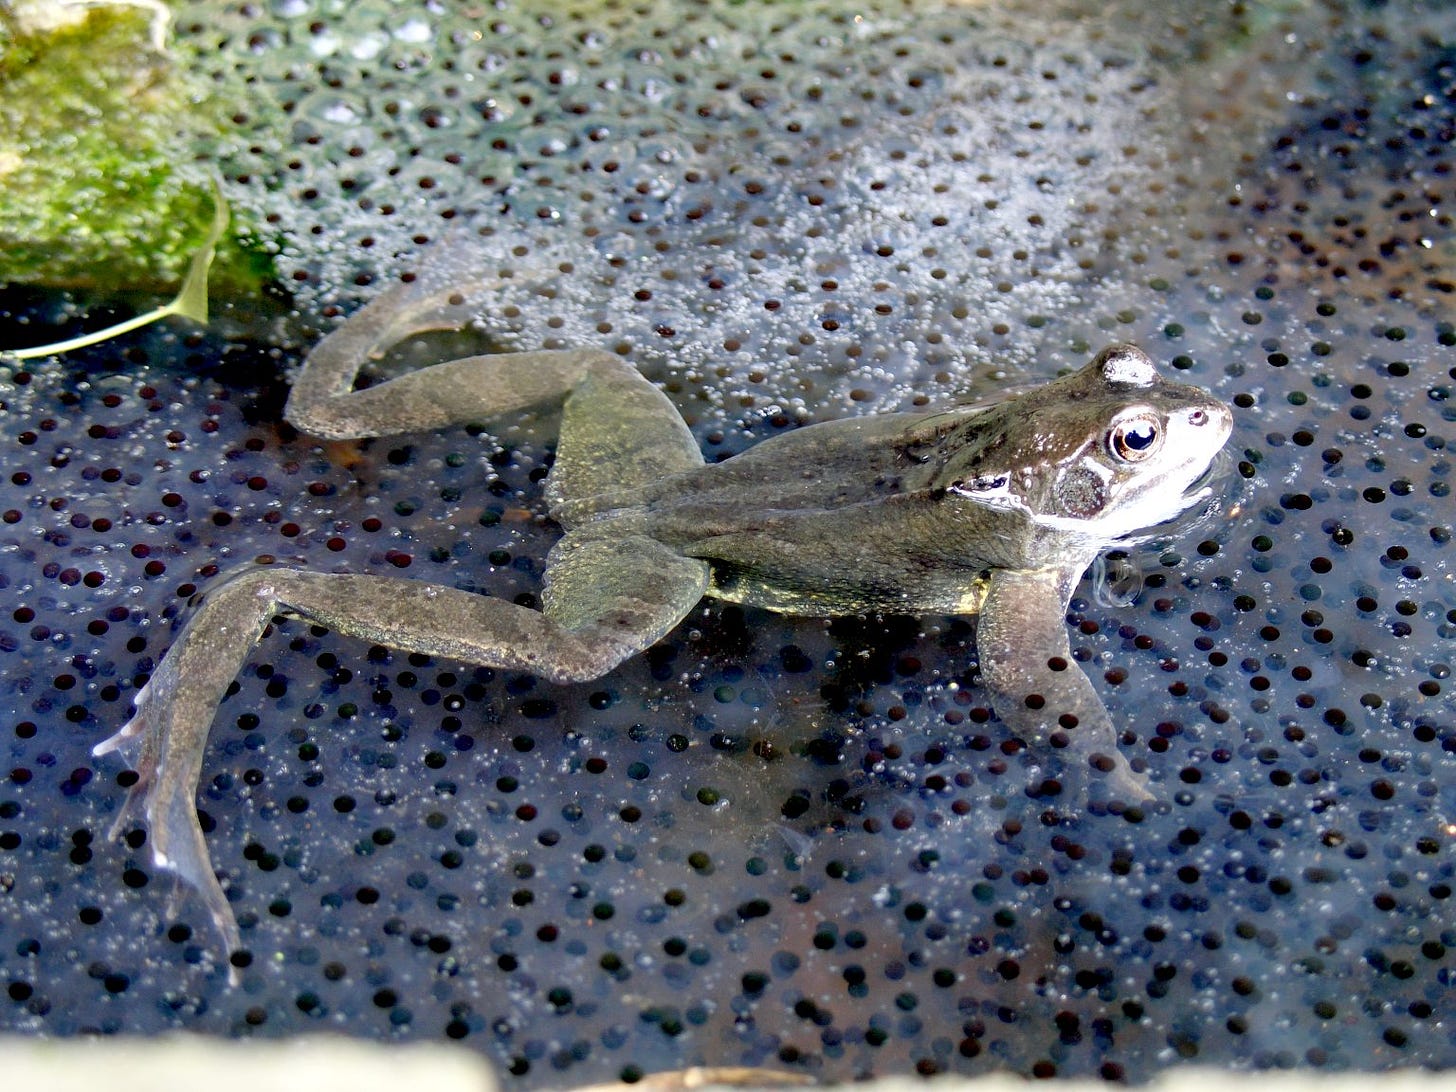 File:Frog in frogspawn.jpg - Wikimedia Commons